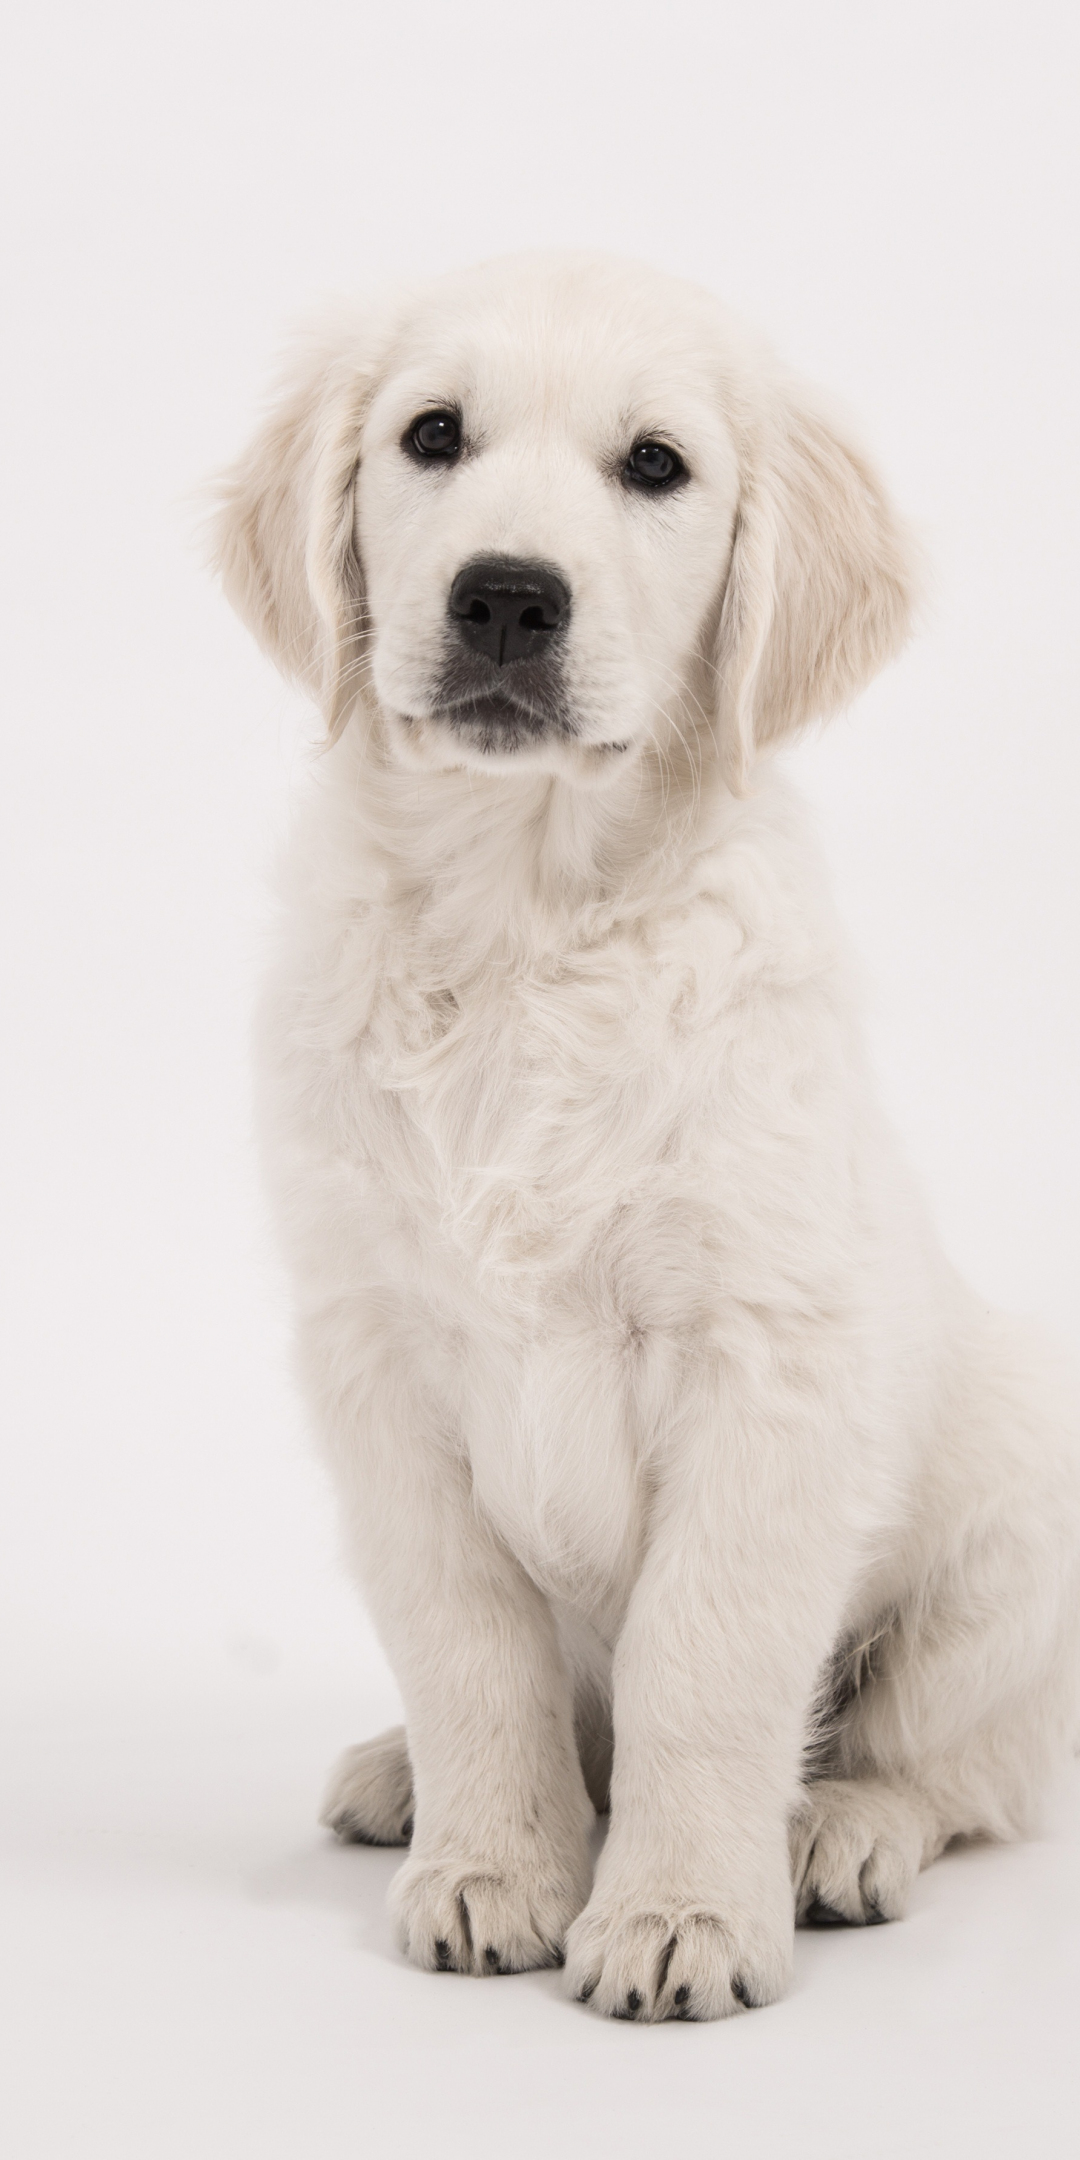 Staring, cute animal, dog, golden retriever, 1080x2160 wallpaper